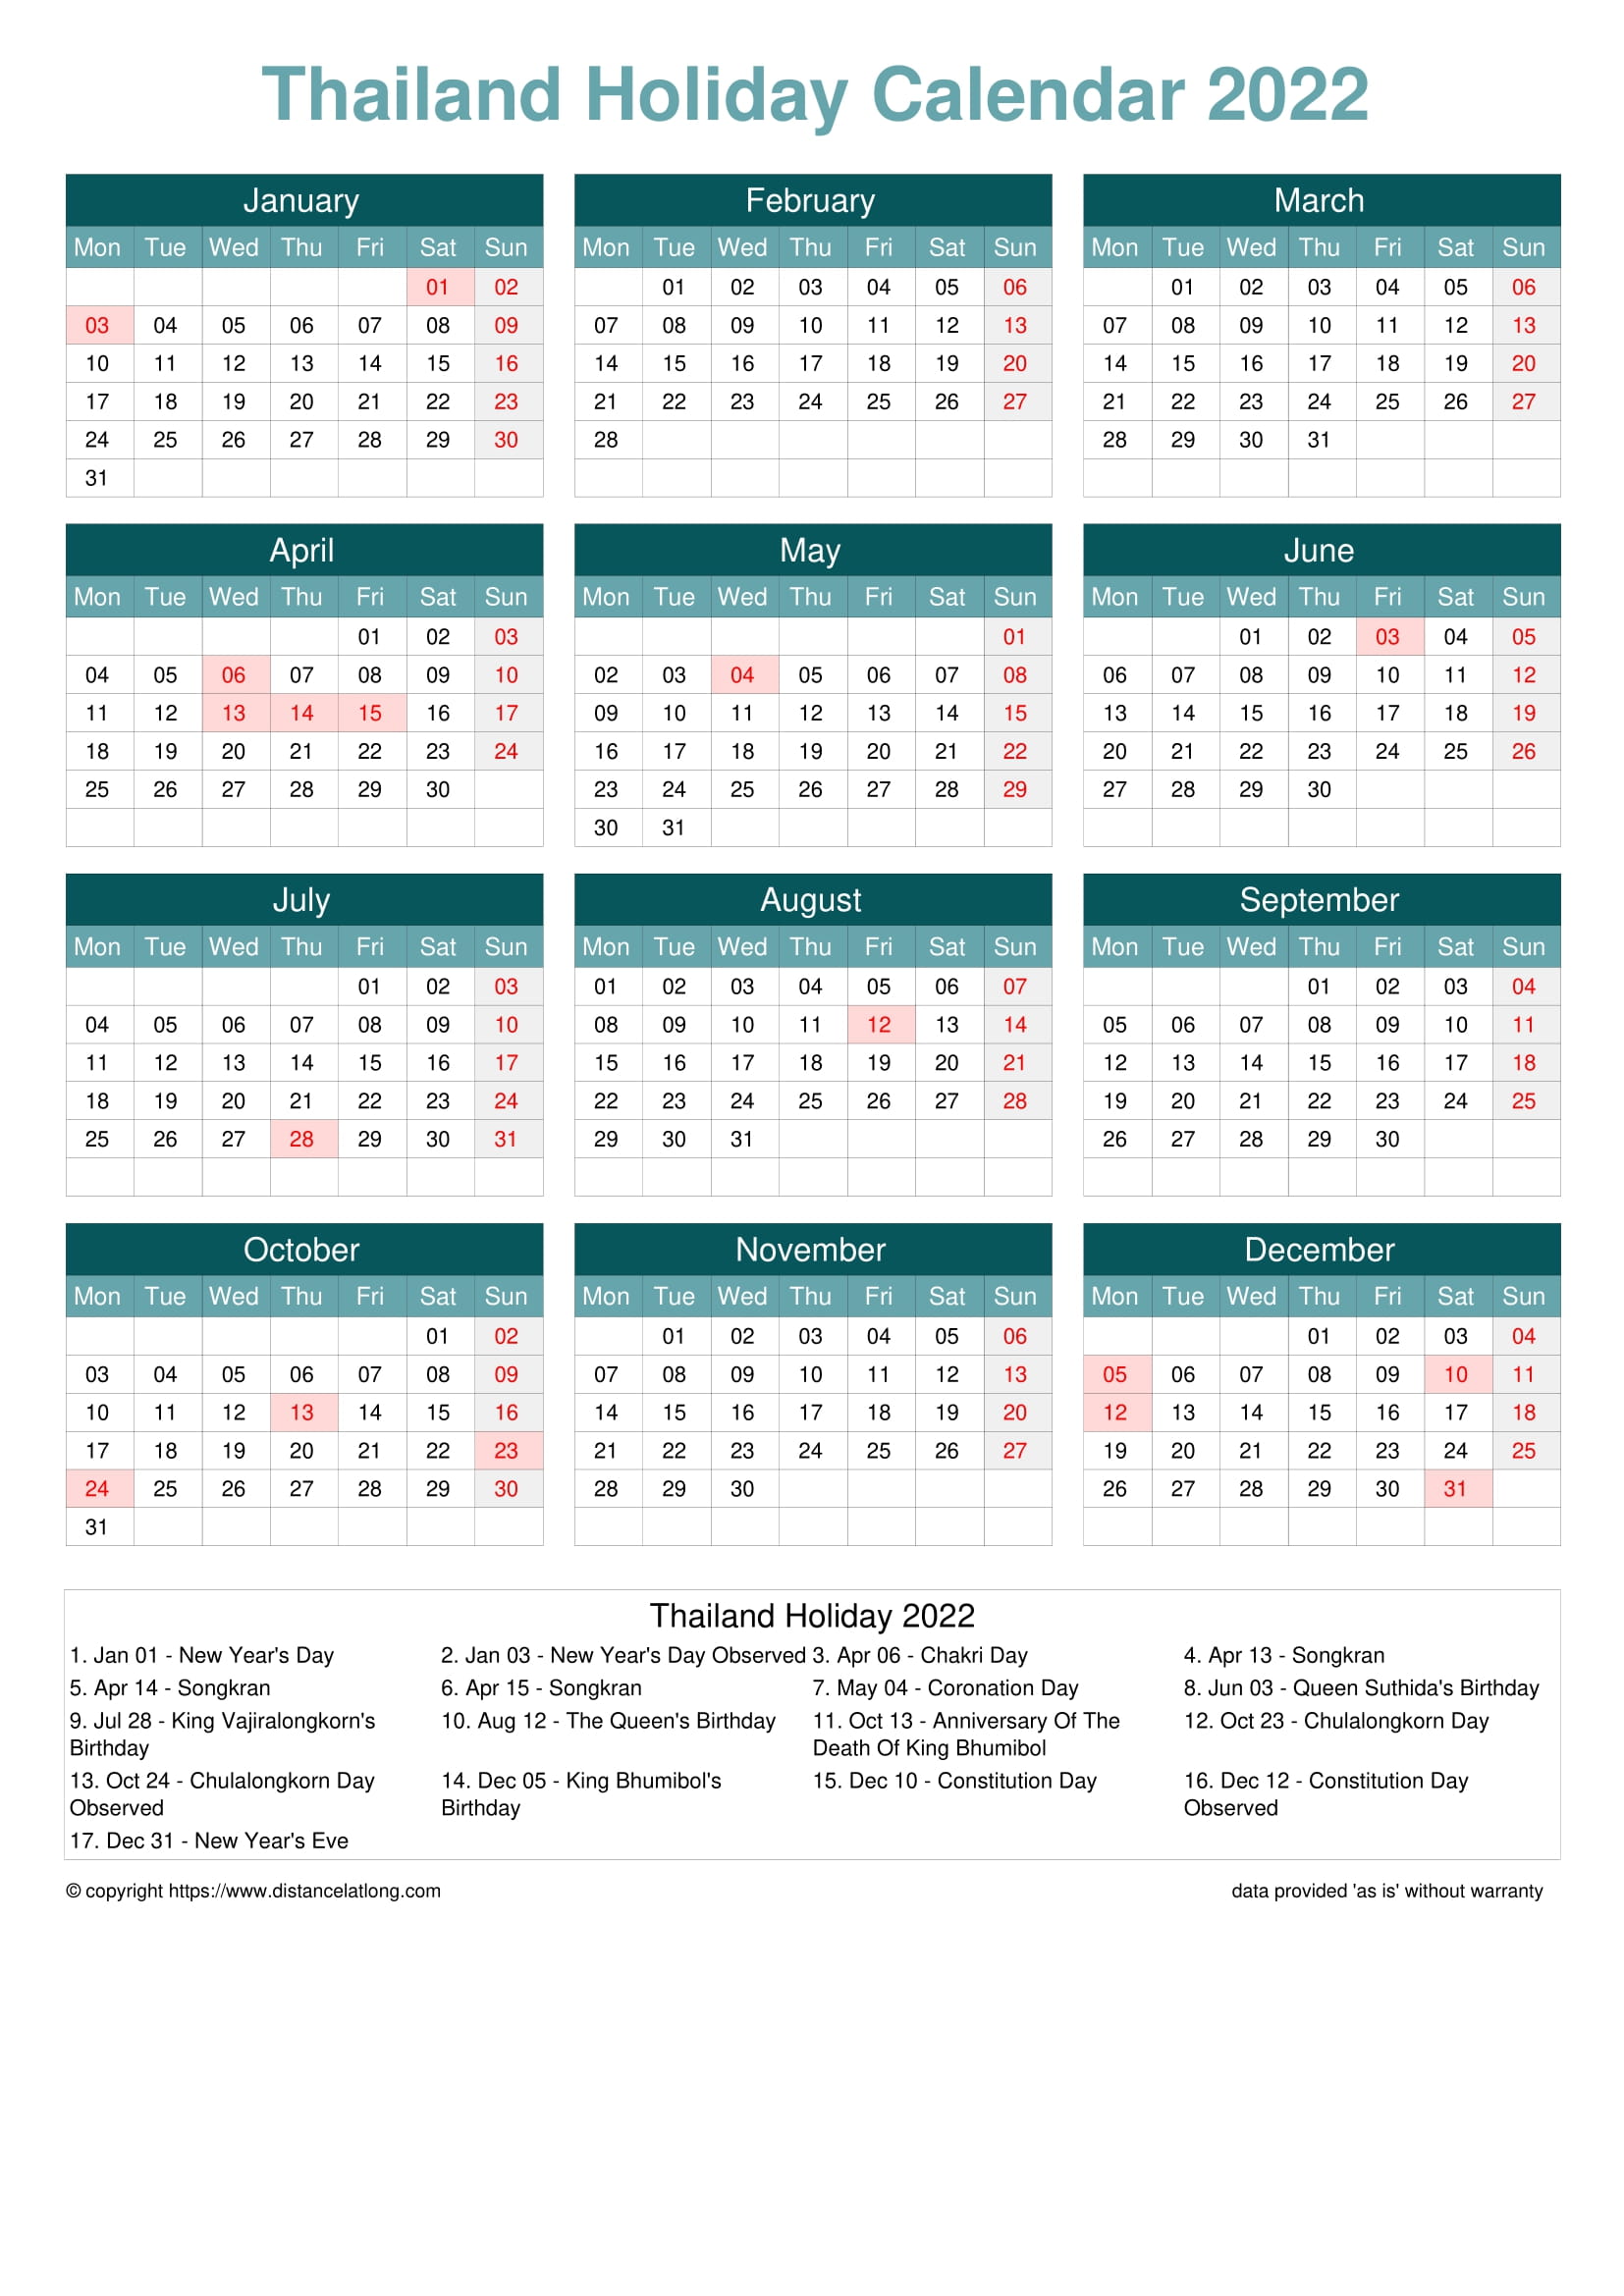 Holiday Calendar 2022 2022 Holiday Calendar Holidayportrait Orientation Free Printable Templates  - Free Download - Distancelatlong.com